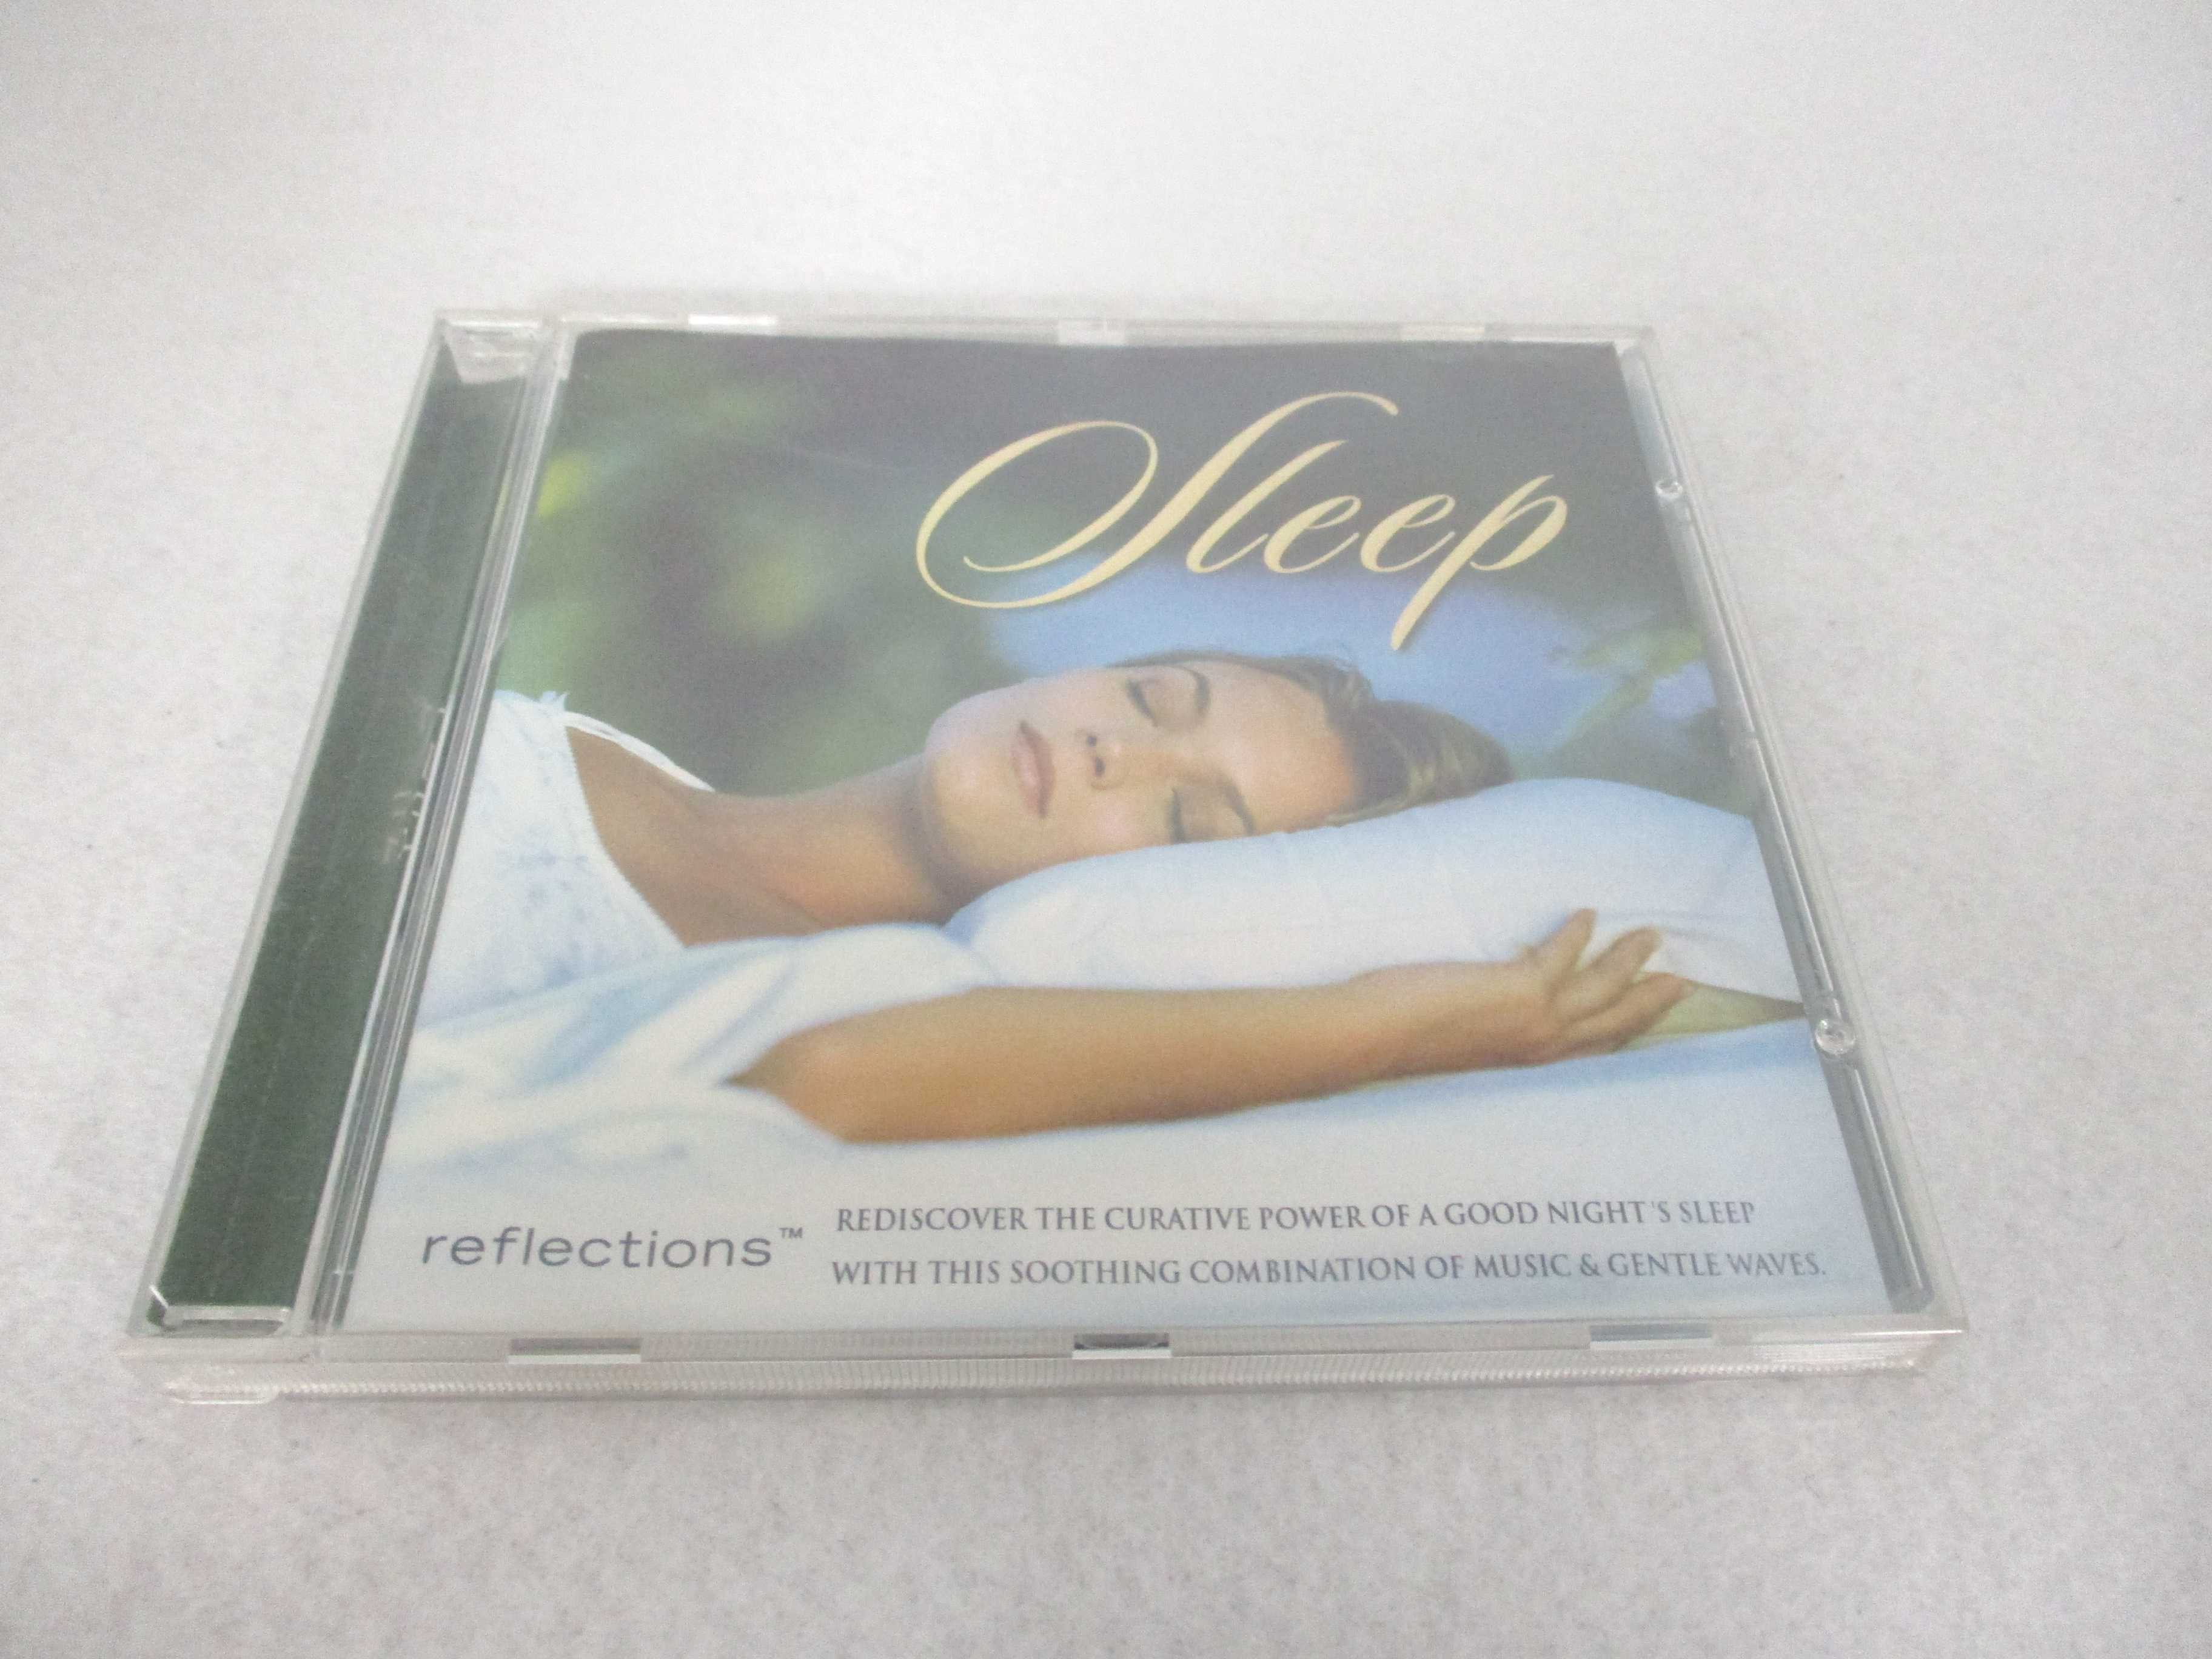 AC06537 【中古】 【CD】 Sleep/reflections